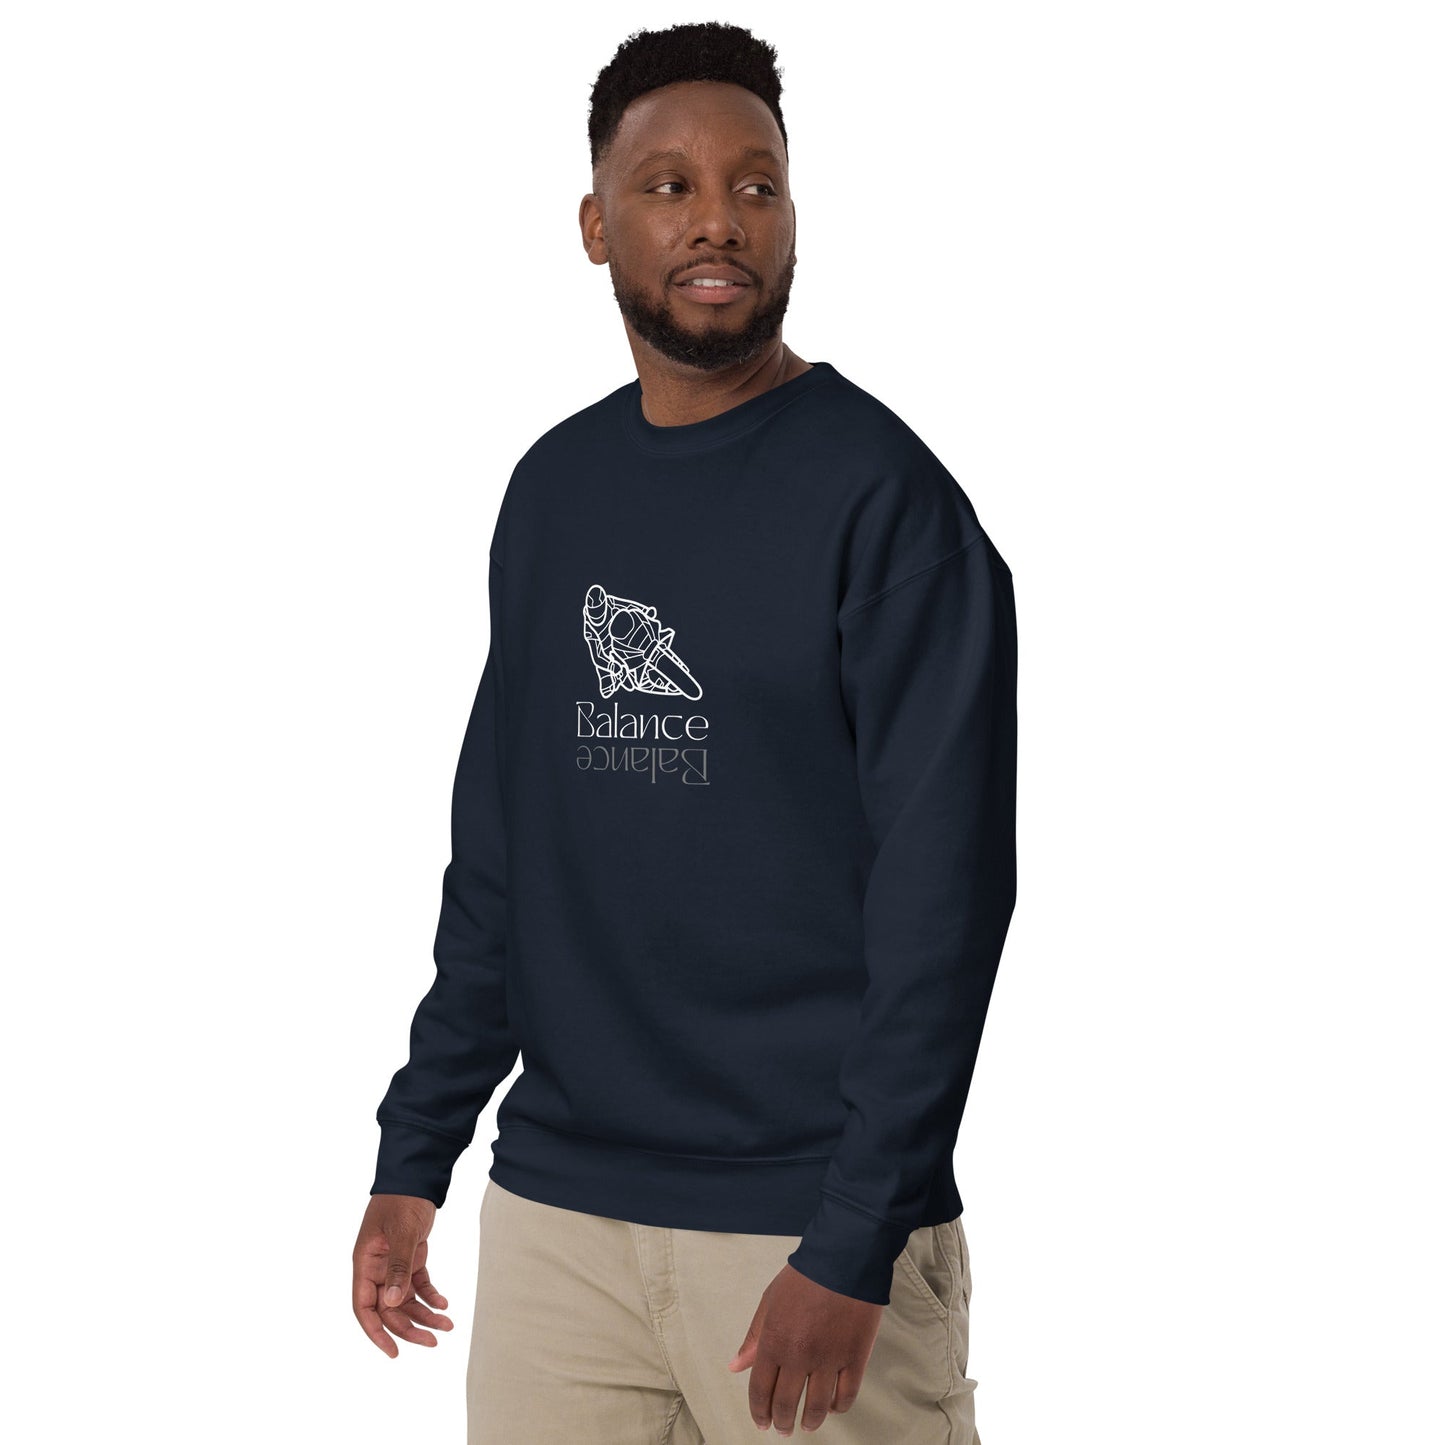 Unisex Premium Sweatshirt - Balance - The Vandi Company